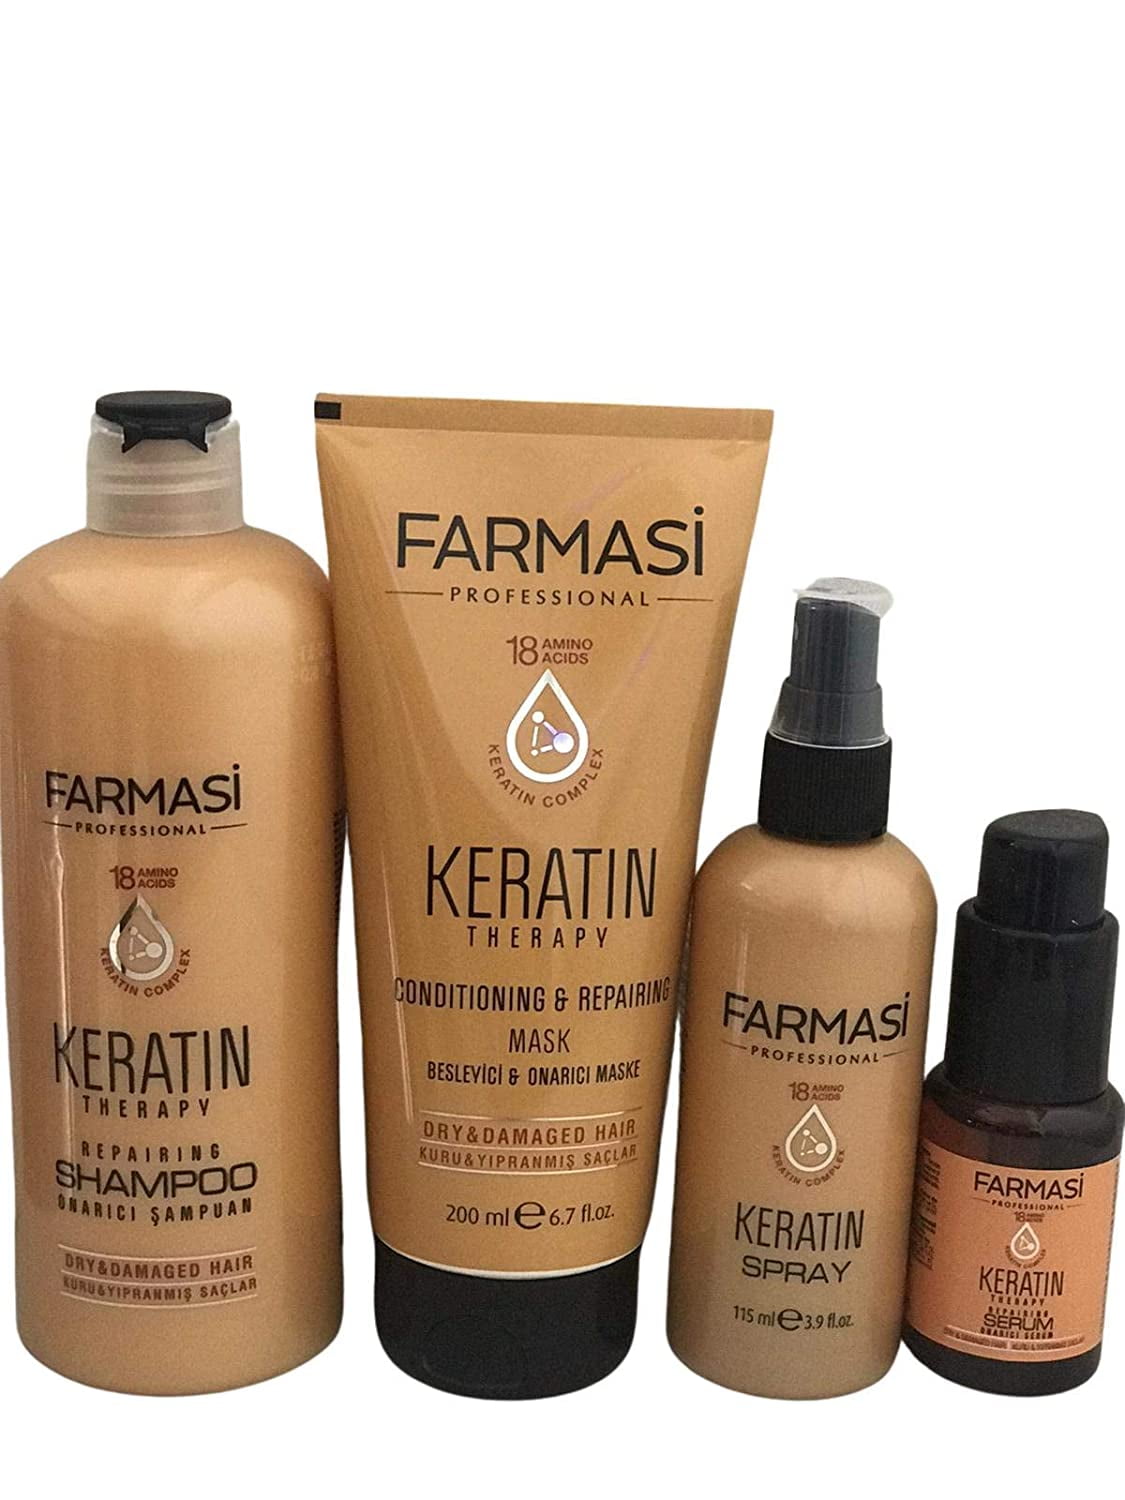 Farmasi Keratin Therapy Set (Shampoo, Mask, Spray and Serum) - Walmart.com